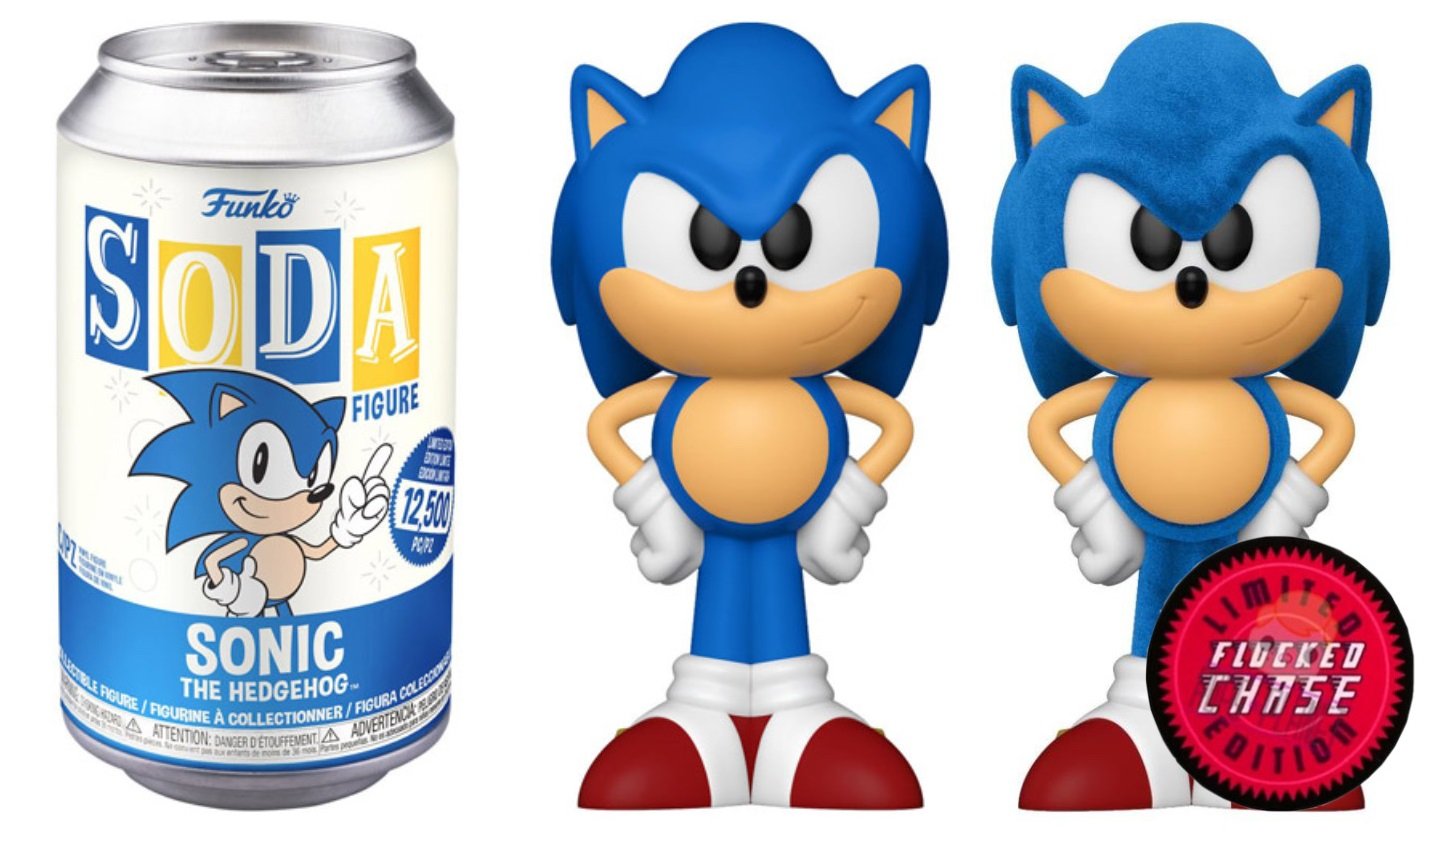 Funko Soda Sonic